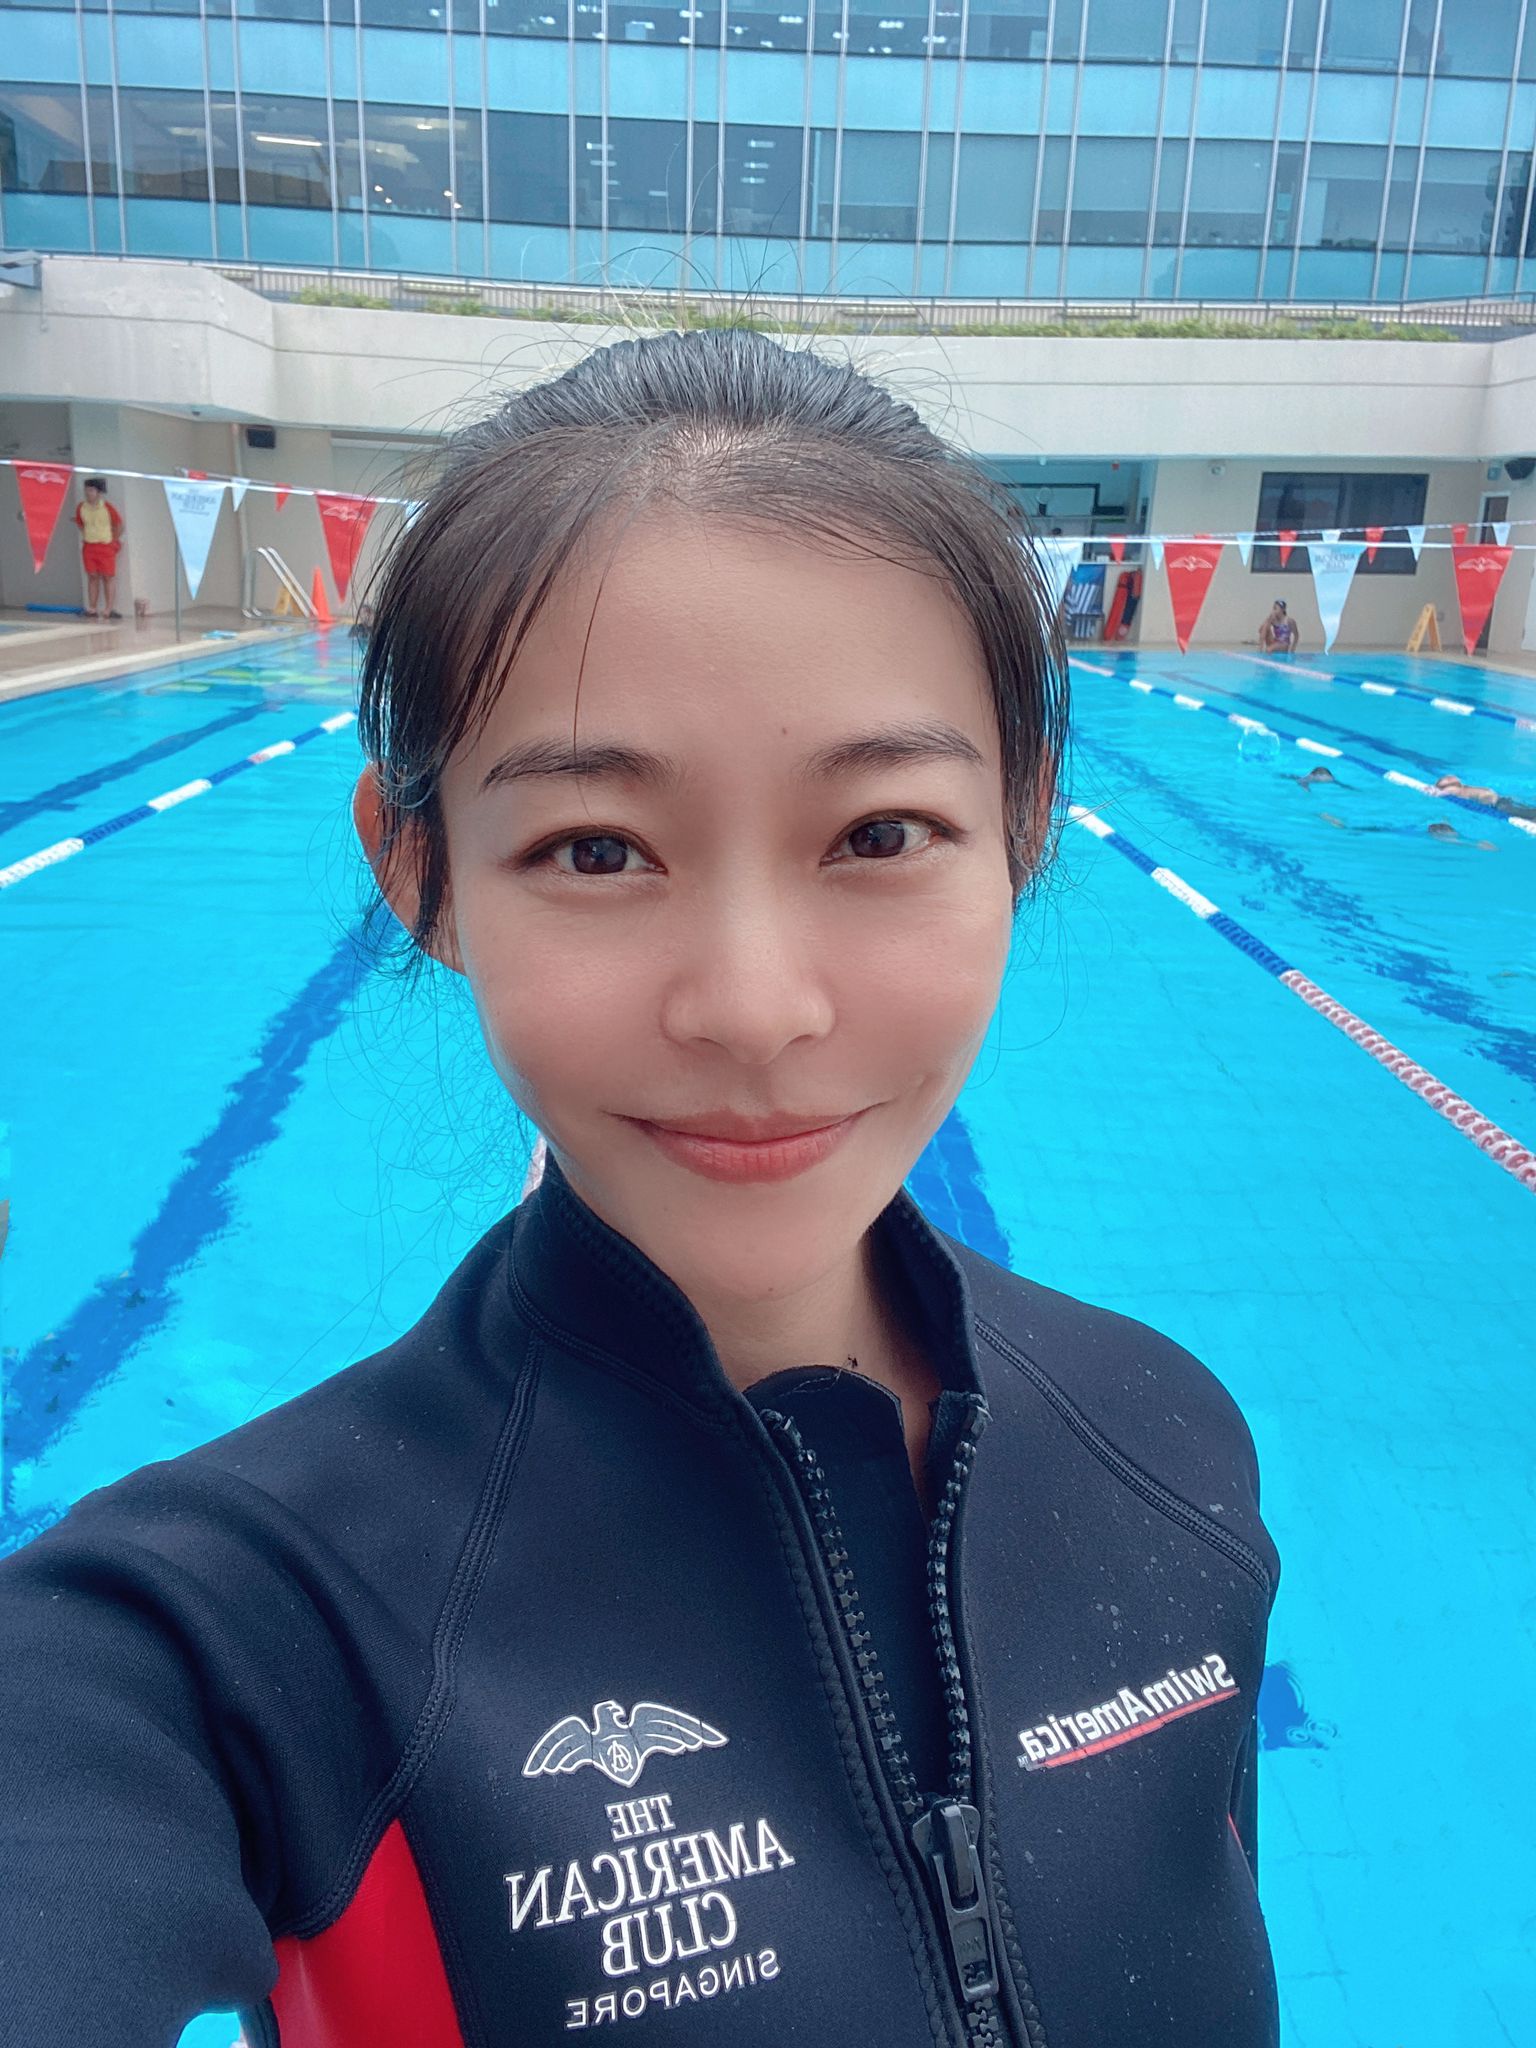 Aquatics | Swimming Club | The American Club Singapore